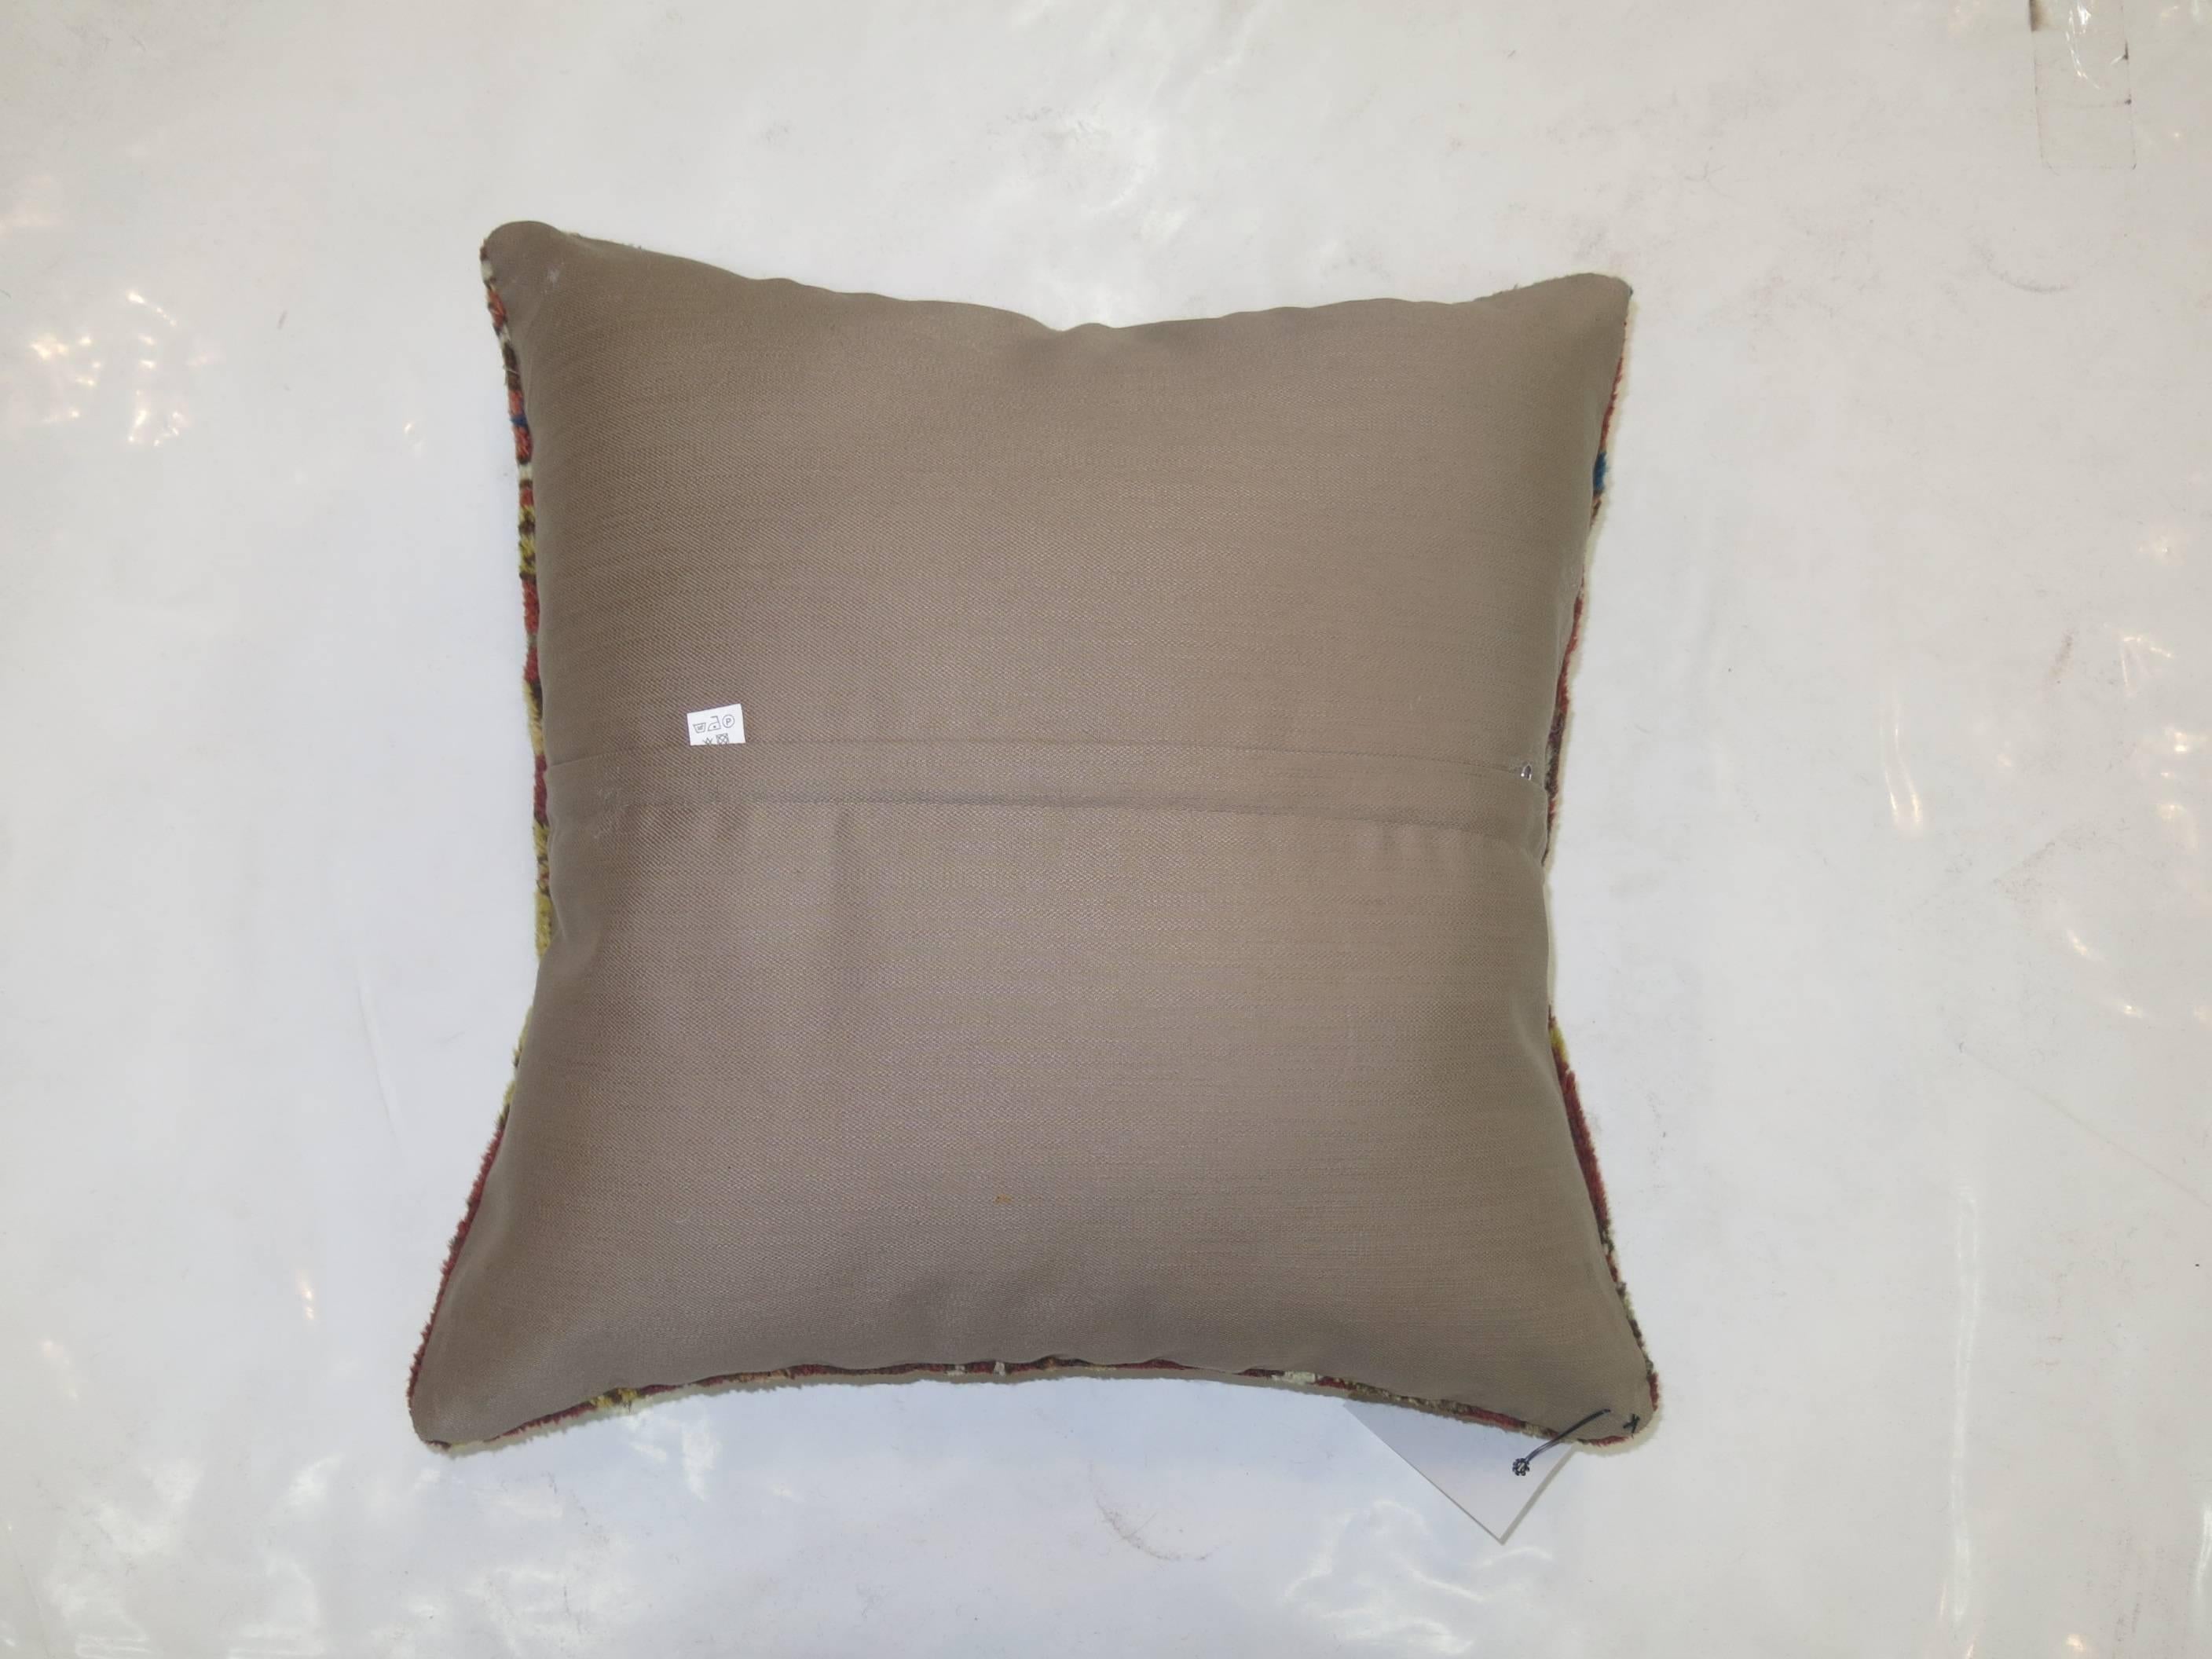 Pillow made from a worn Turkish Sivas pillow

Measures: 16'' x 16''.